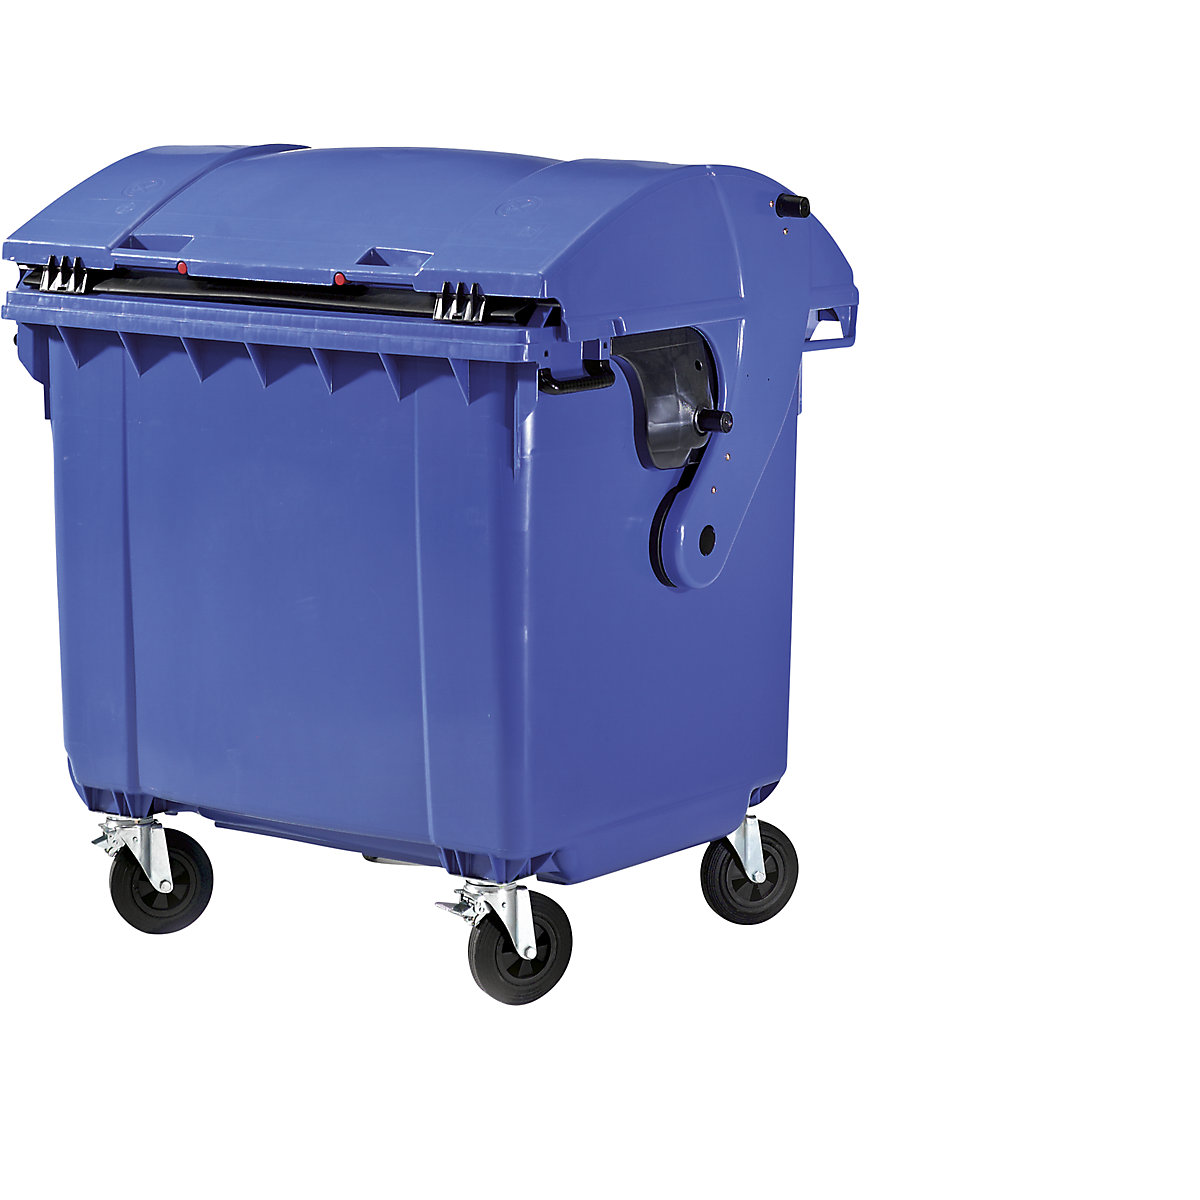 Container per rifiuti in plastica, DIN EN 840, capacità 1100 l, largh. x alt. x prof. 1360 x 1465 x 1100 mm, coperchio scorrevole, sicura per bambini, blu-4